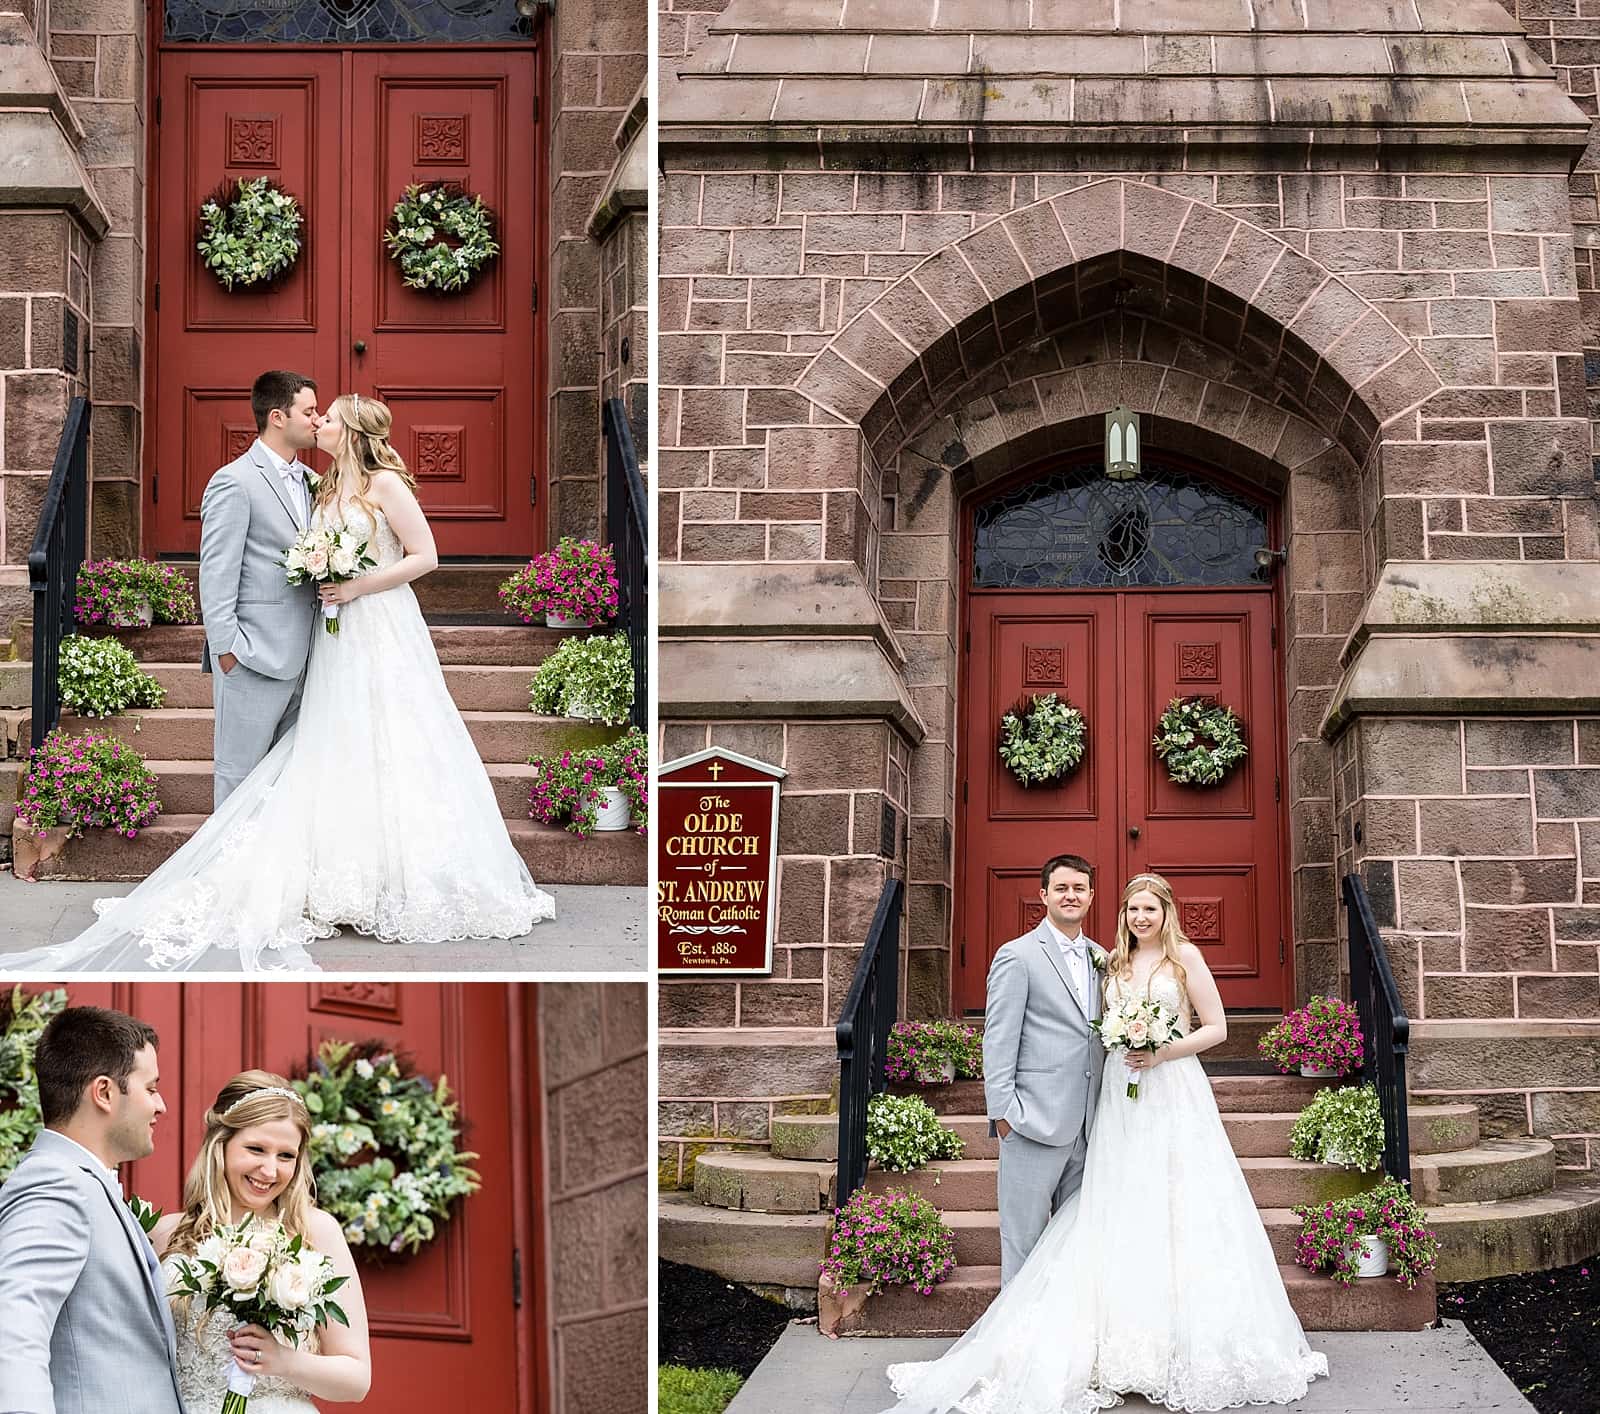 Church wedding, bride and groom portraits, wedding portrait, red church door